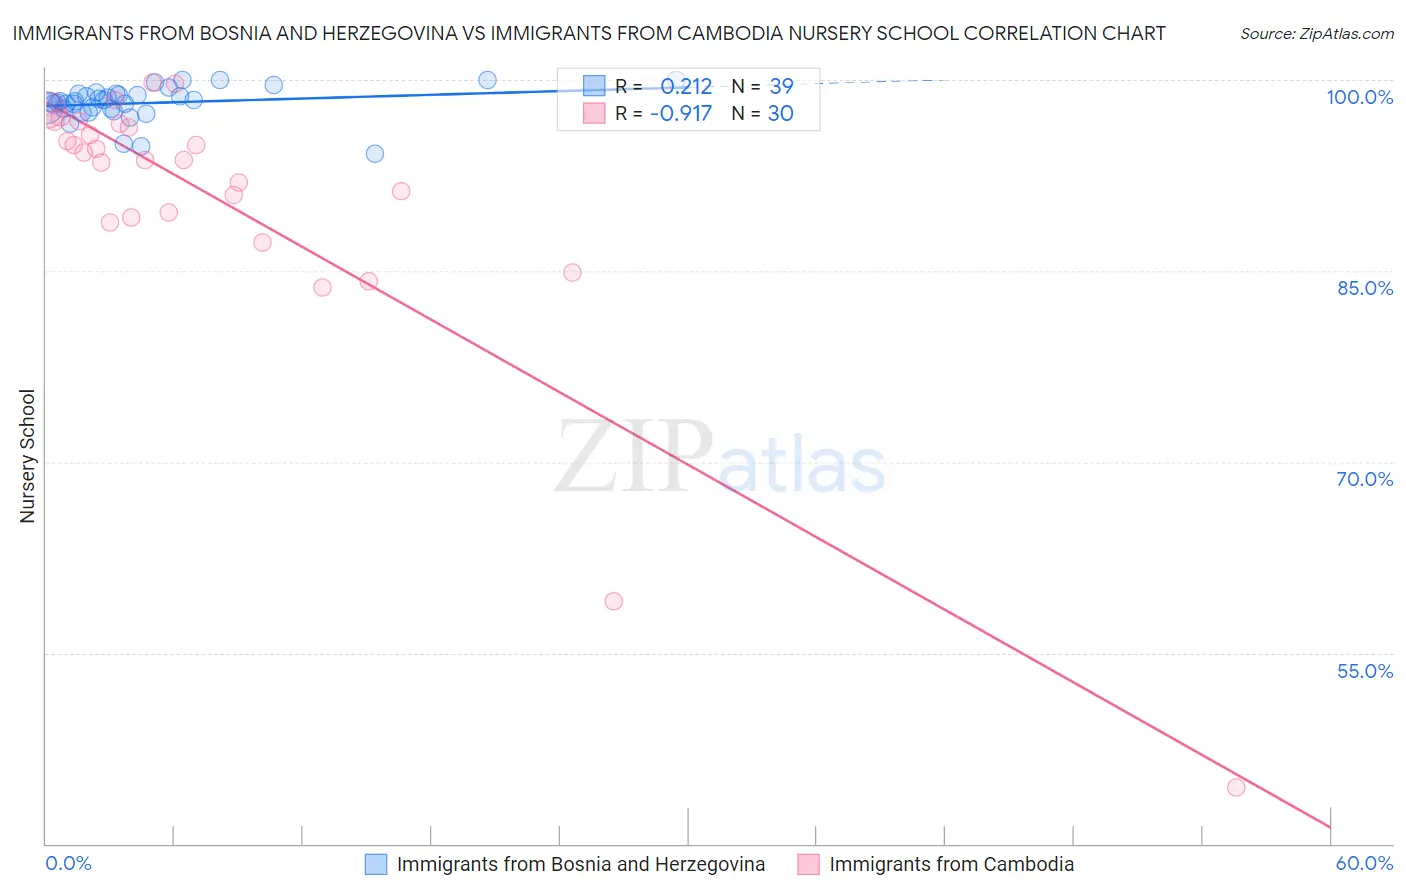 Immigrants from Bosnia and Herzegovina vs Immigrants from Cambodia Nursery School